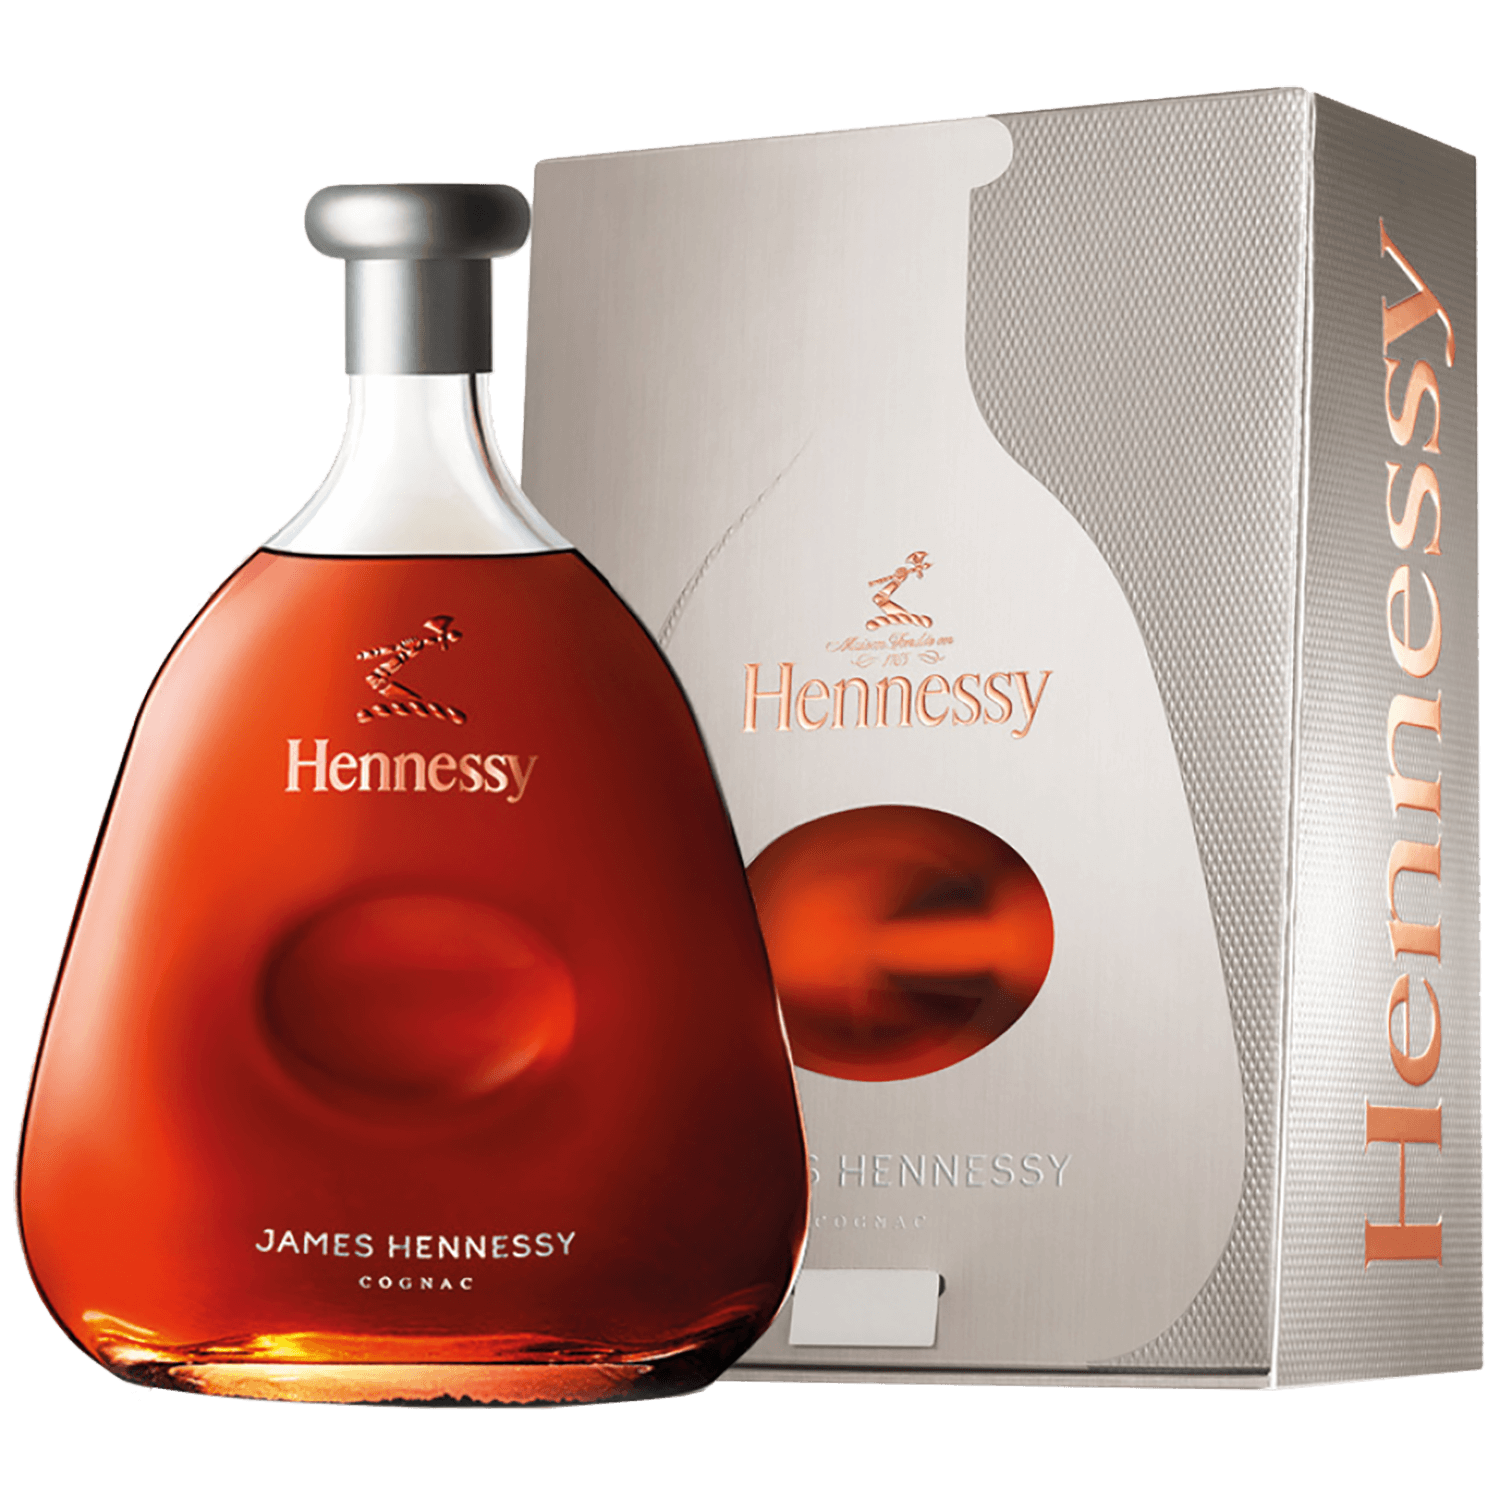 Hennessy James Hennessy Cognac (gift box) hennessy cognac vsop